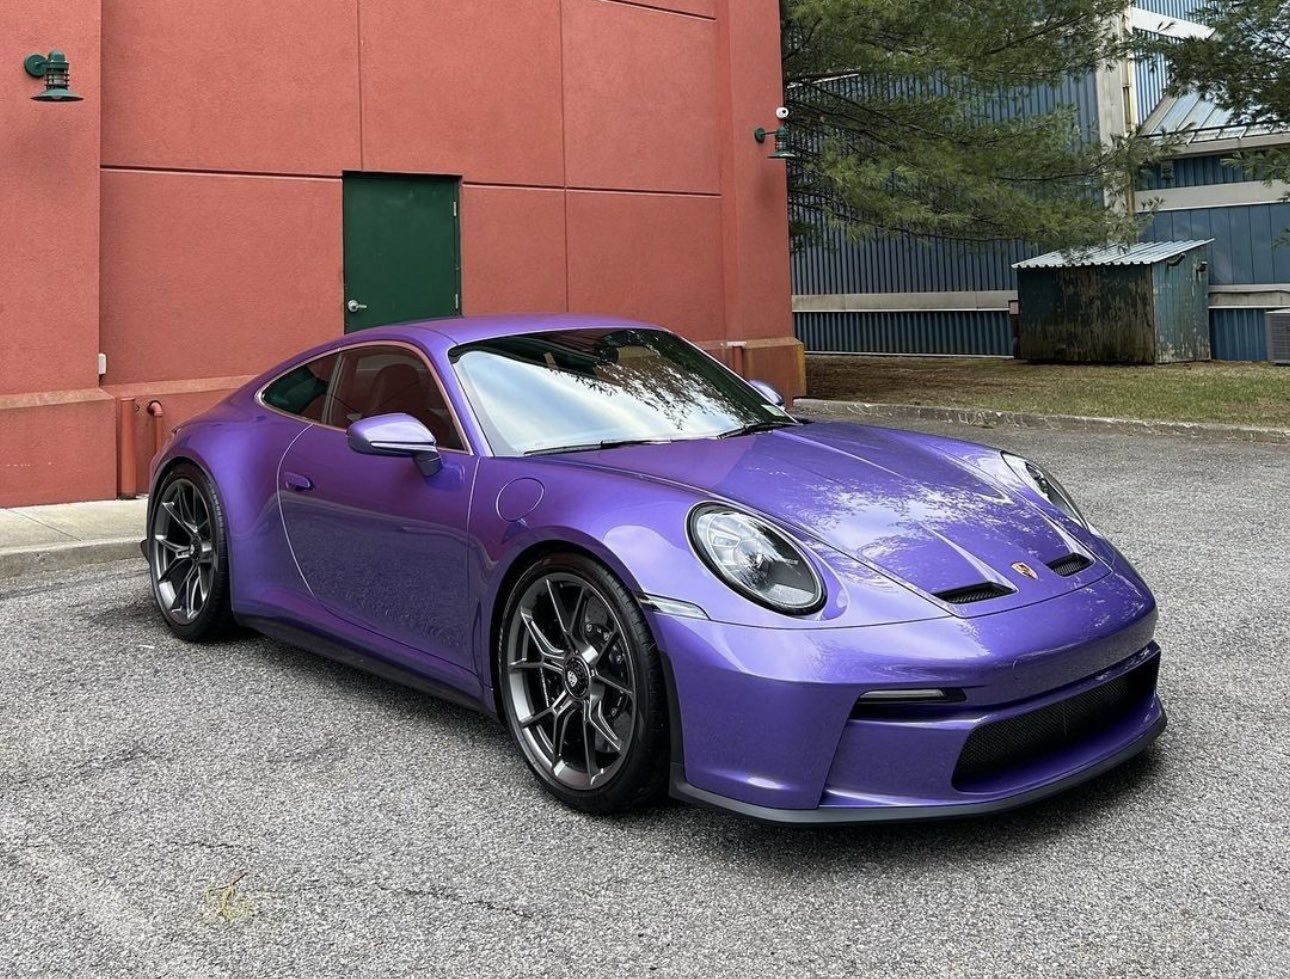 VViViD+ Gloss Midnight Purple (Porsche 911 GT3 Purple)